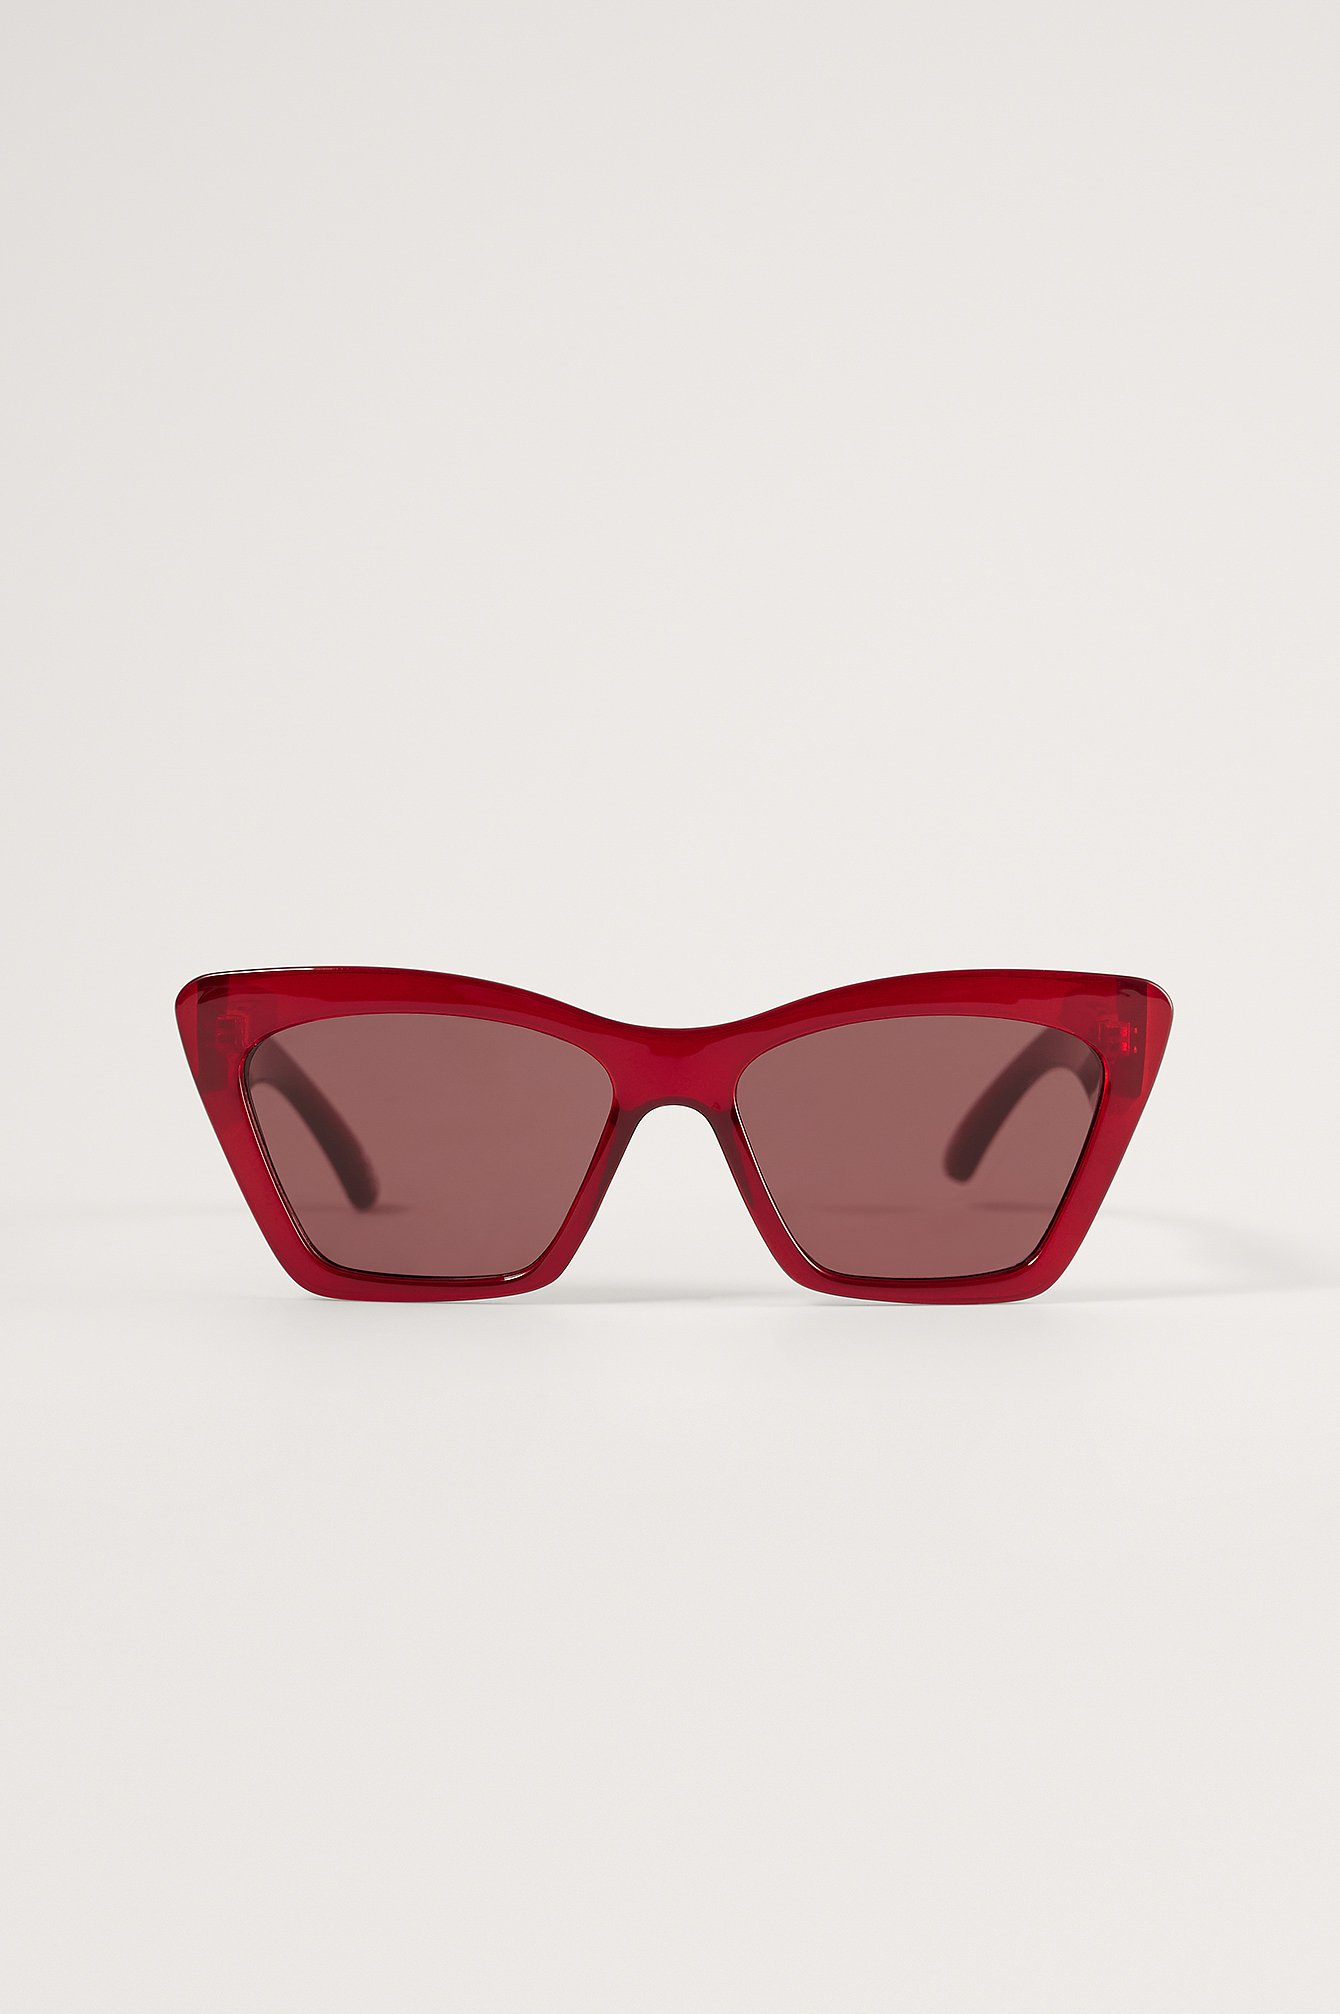 Beperken Bediening mogelijk Weg Vierkante cat-eye zonnebril Rood | NA-KD